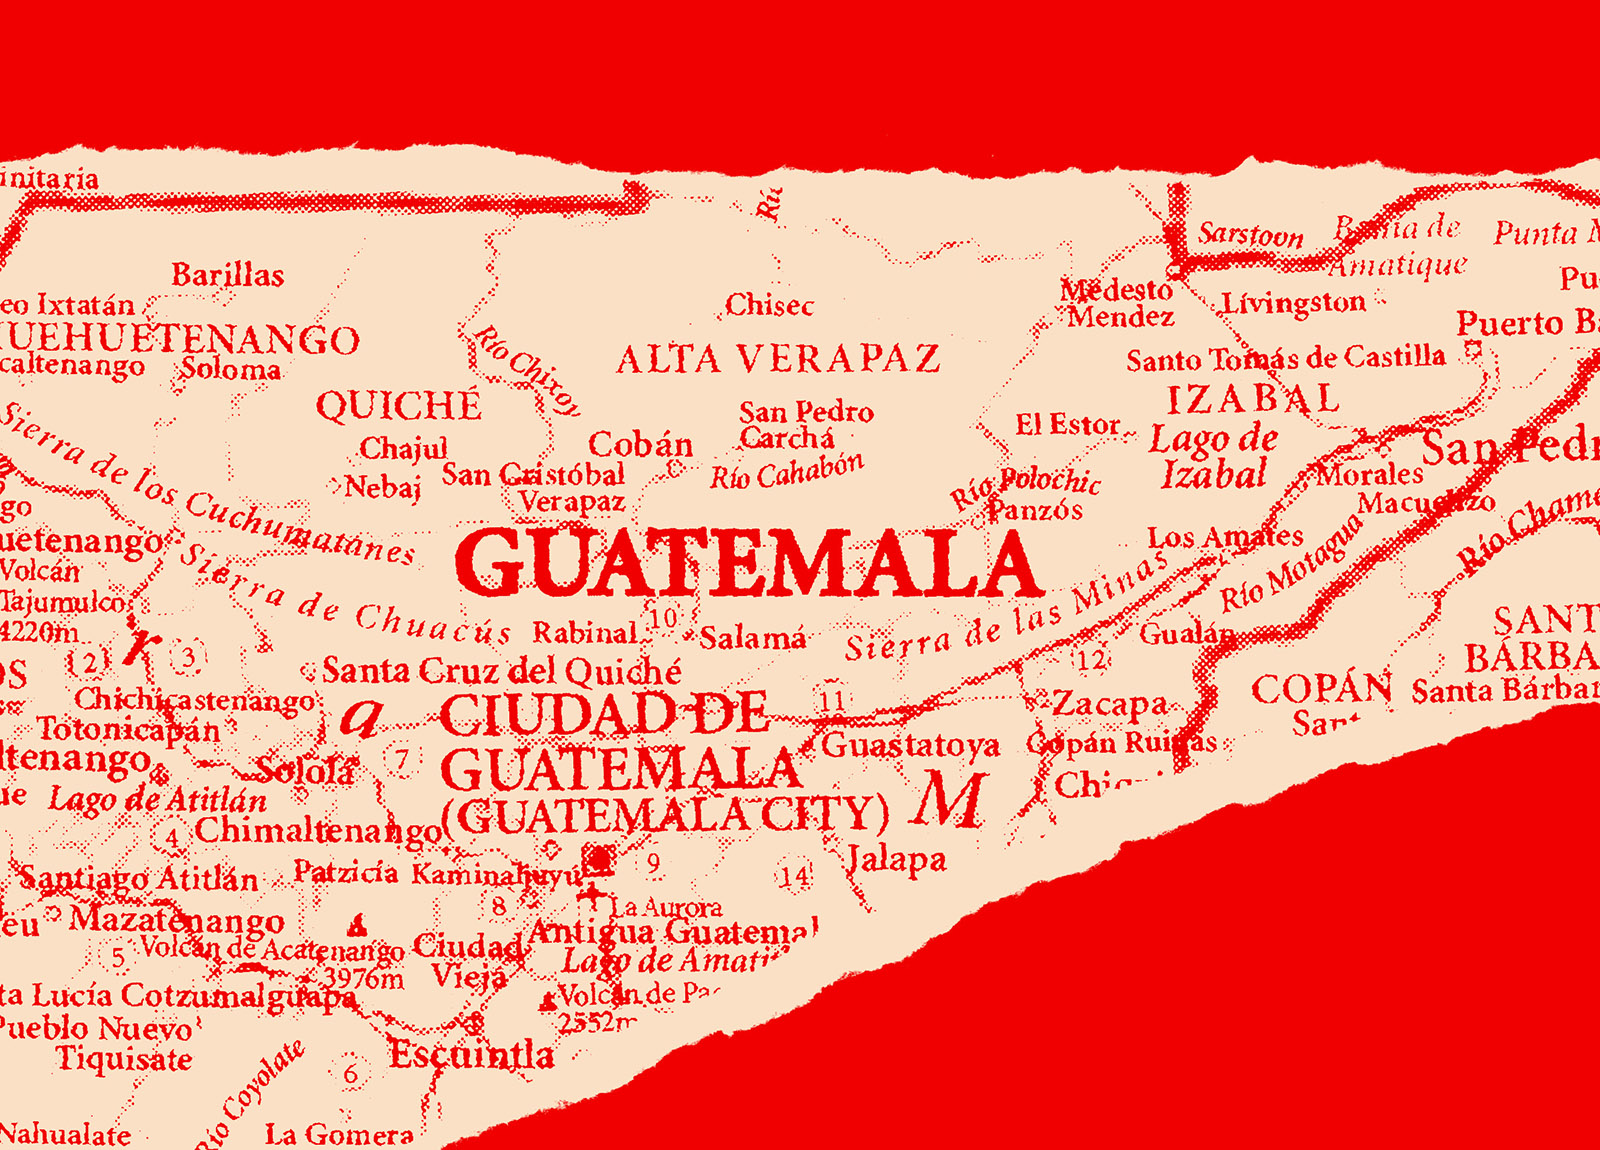 https://newyorkwarcrimes.com/media/pages/guatemala-1954/a550f71574-1709843976/history-guatemala-header.jpg